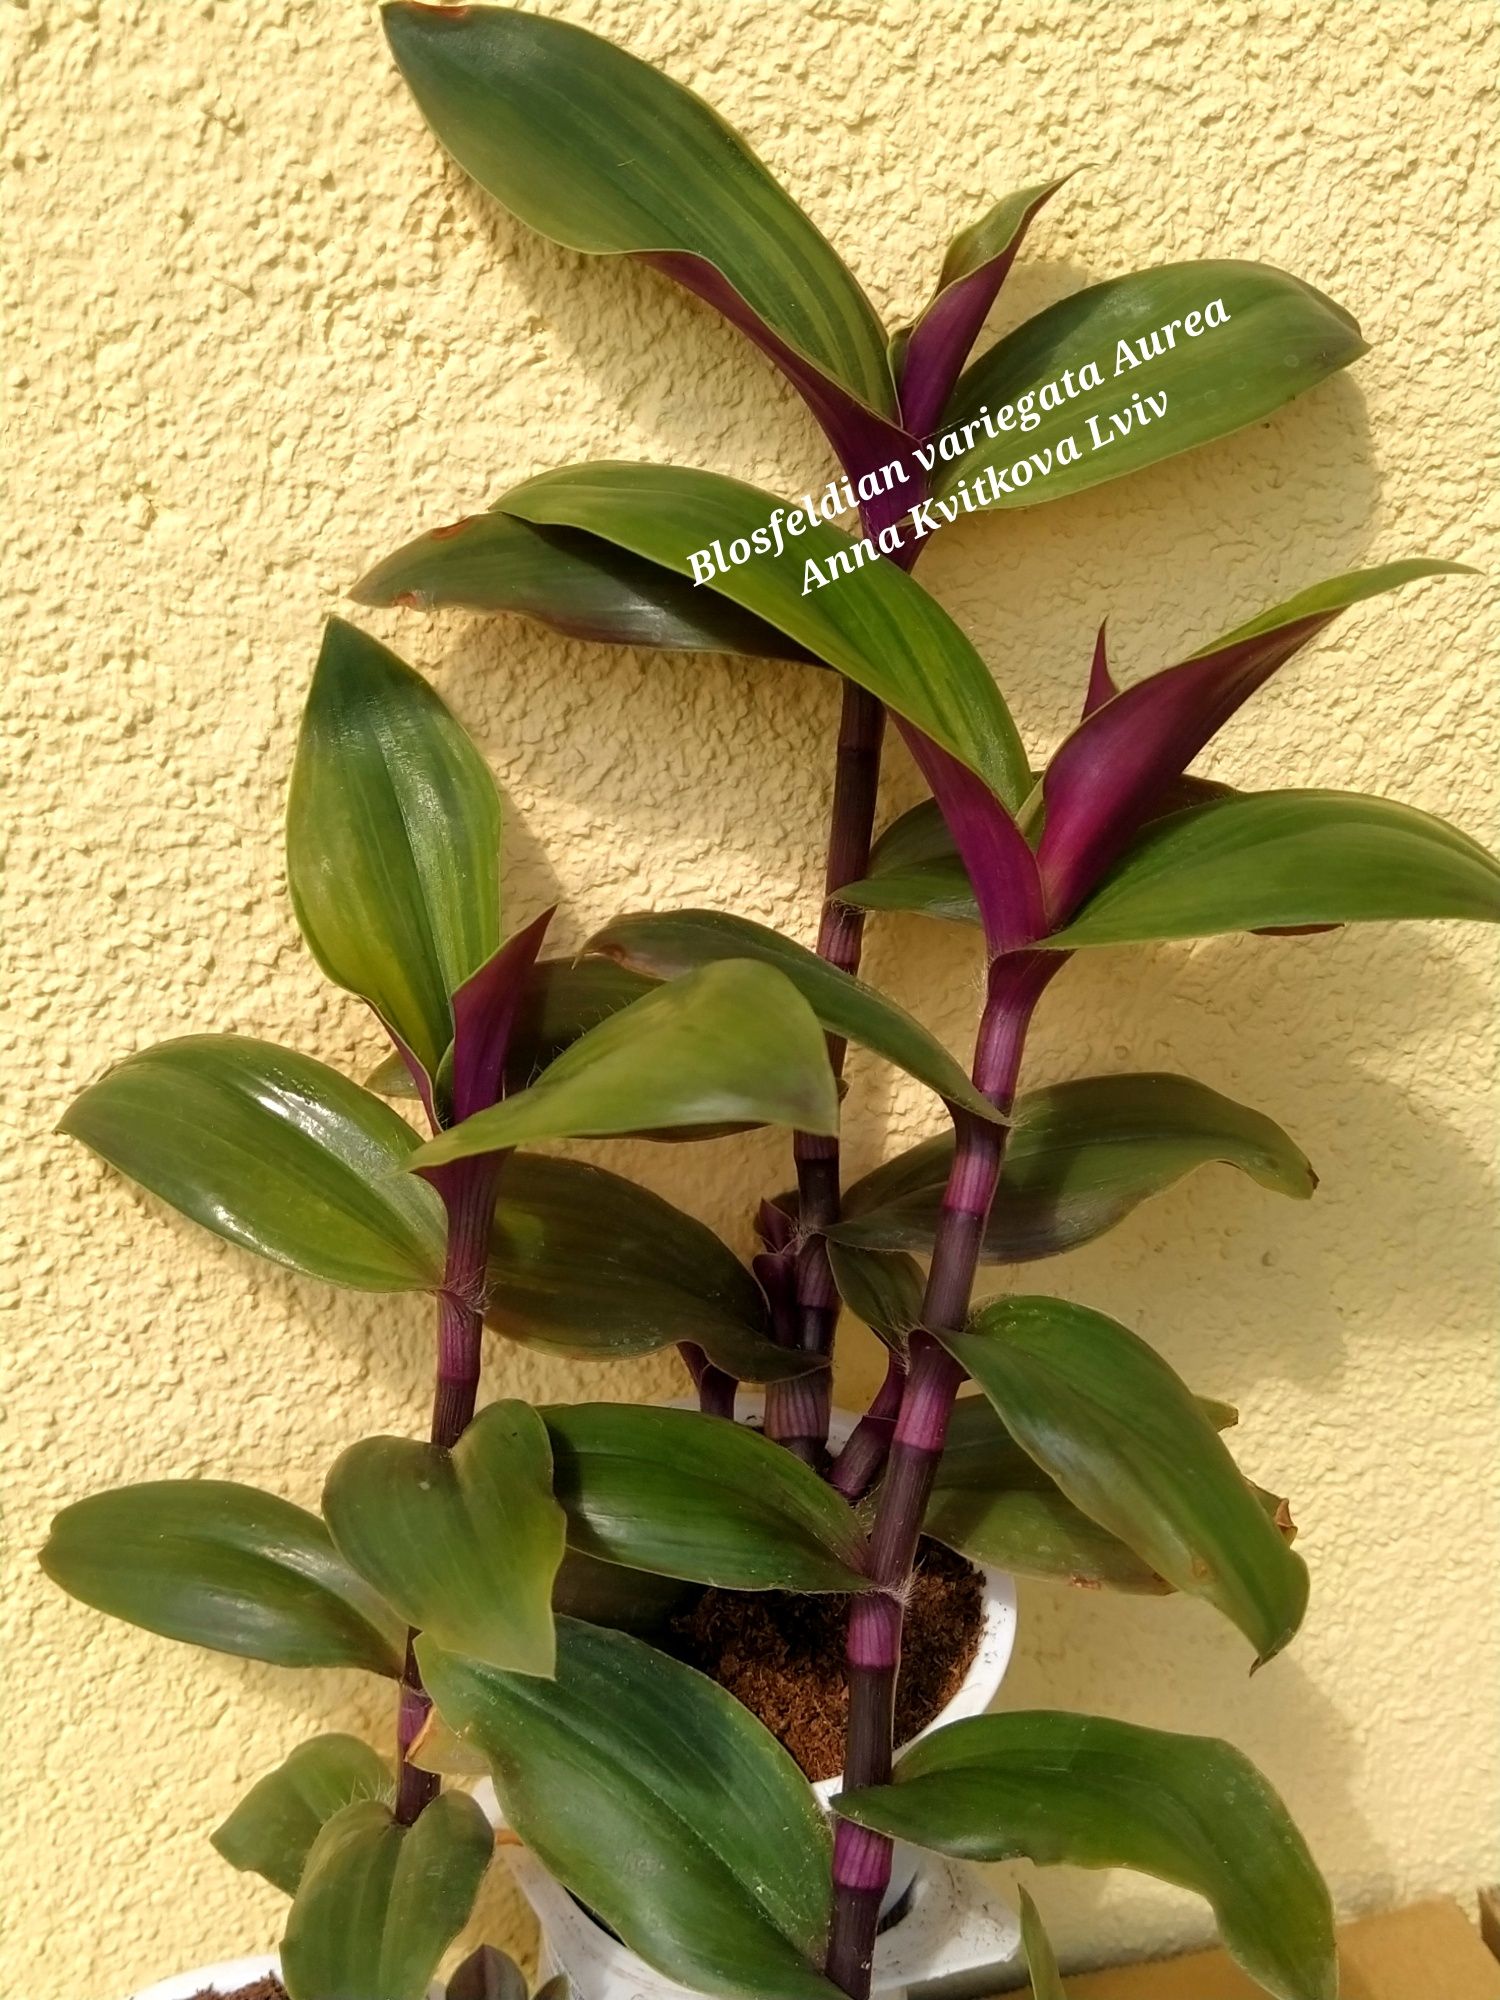 Традесканція  Blosfeldian variegata Aurea